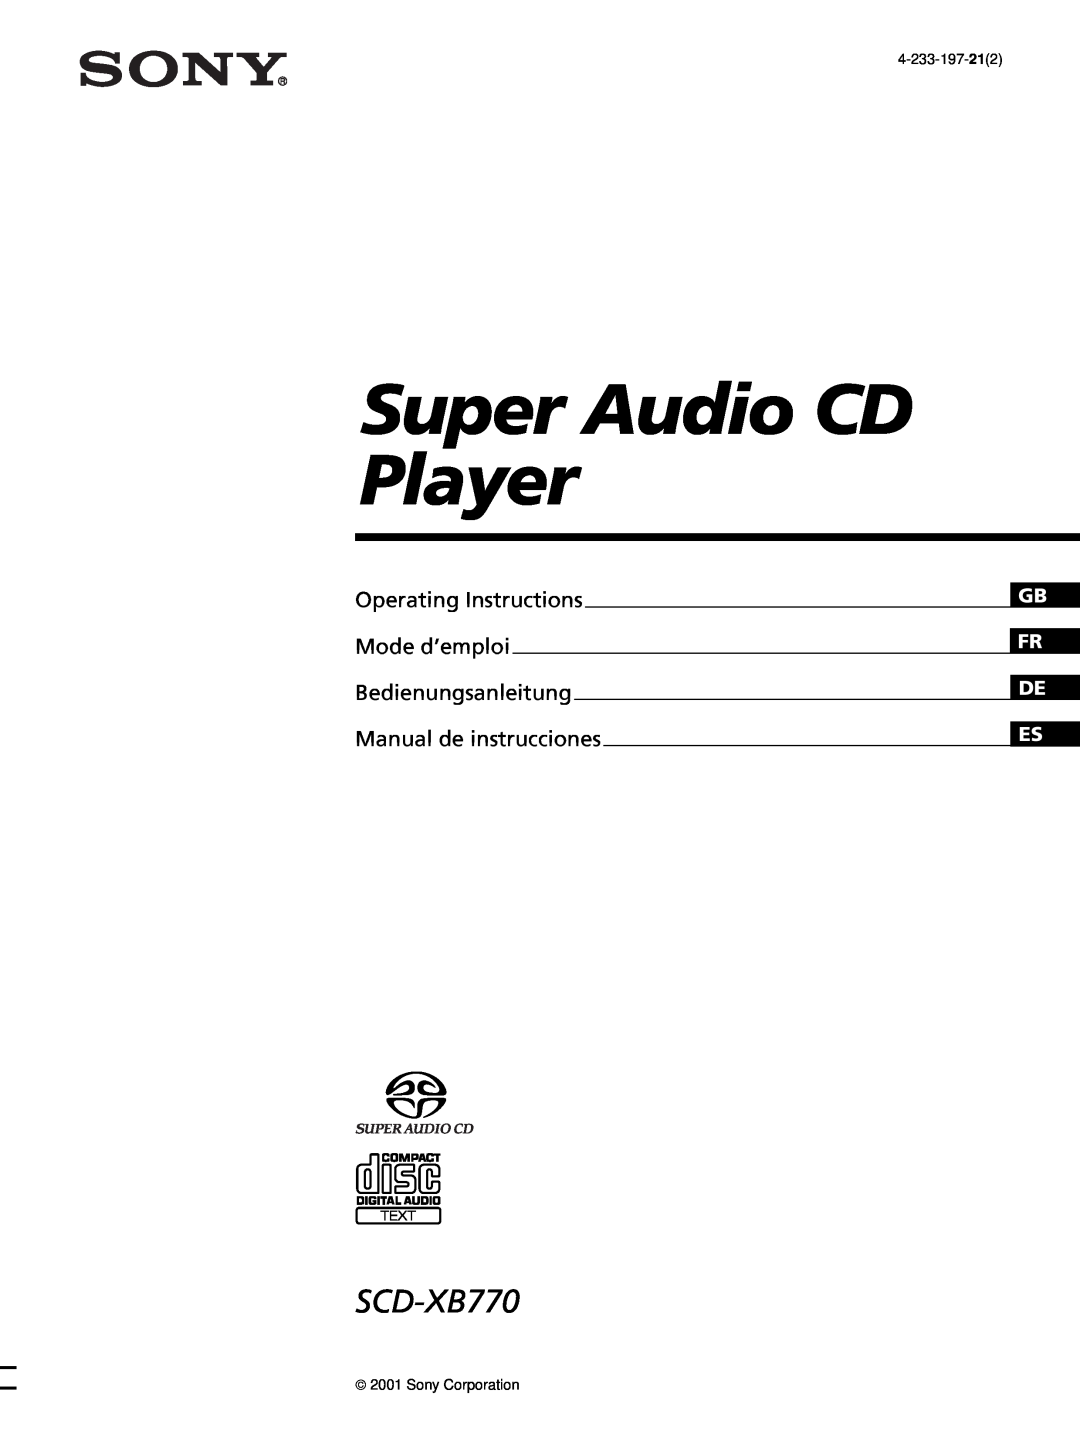 Sony SCD-XB770 operating instructions Super Audio CD Player, Operating Instructions, Mode d’emploi, Bedienungsanleitung 